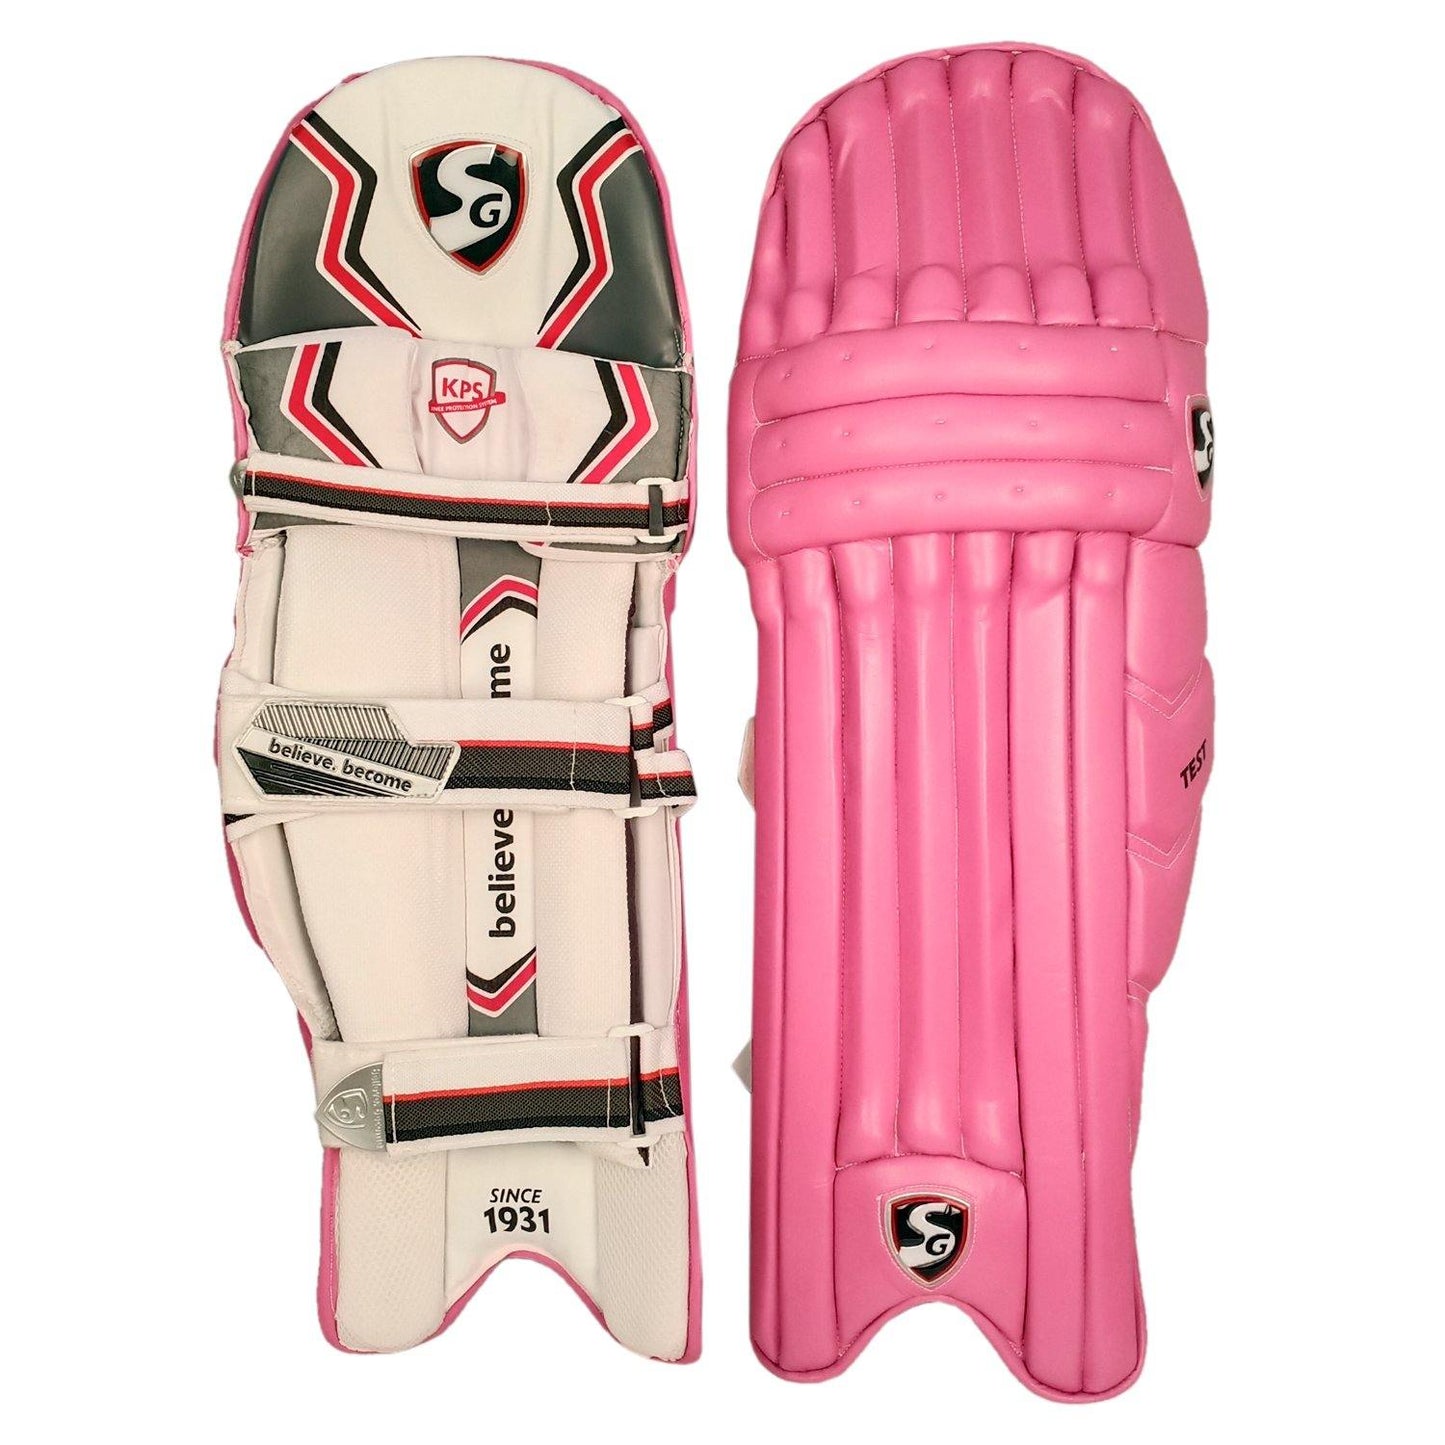 SG Test Batting Legguard - Pink - Best Price online Prokicksports.com